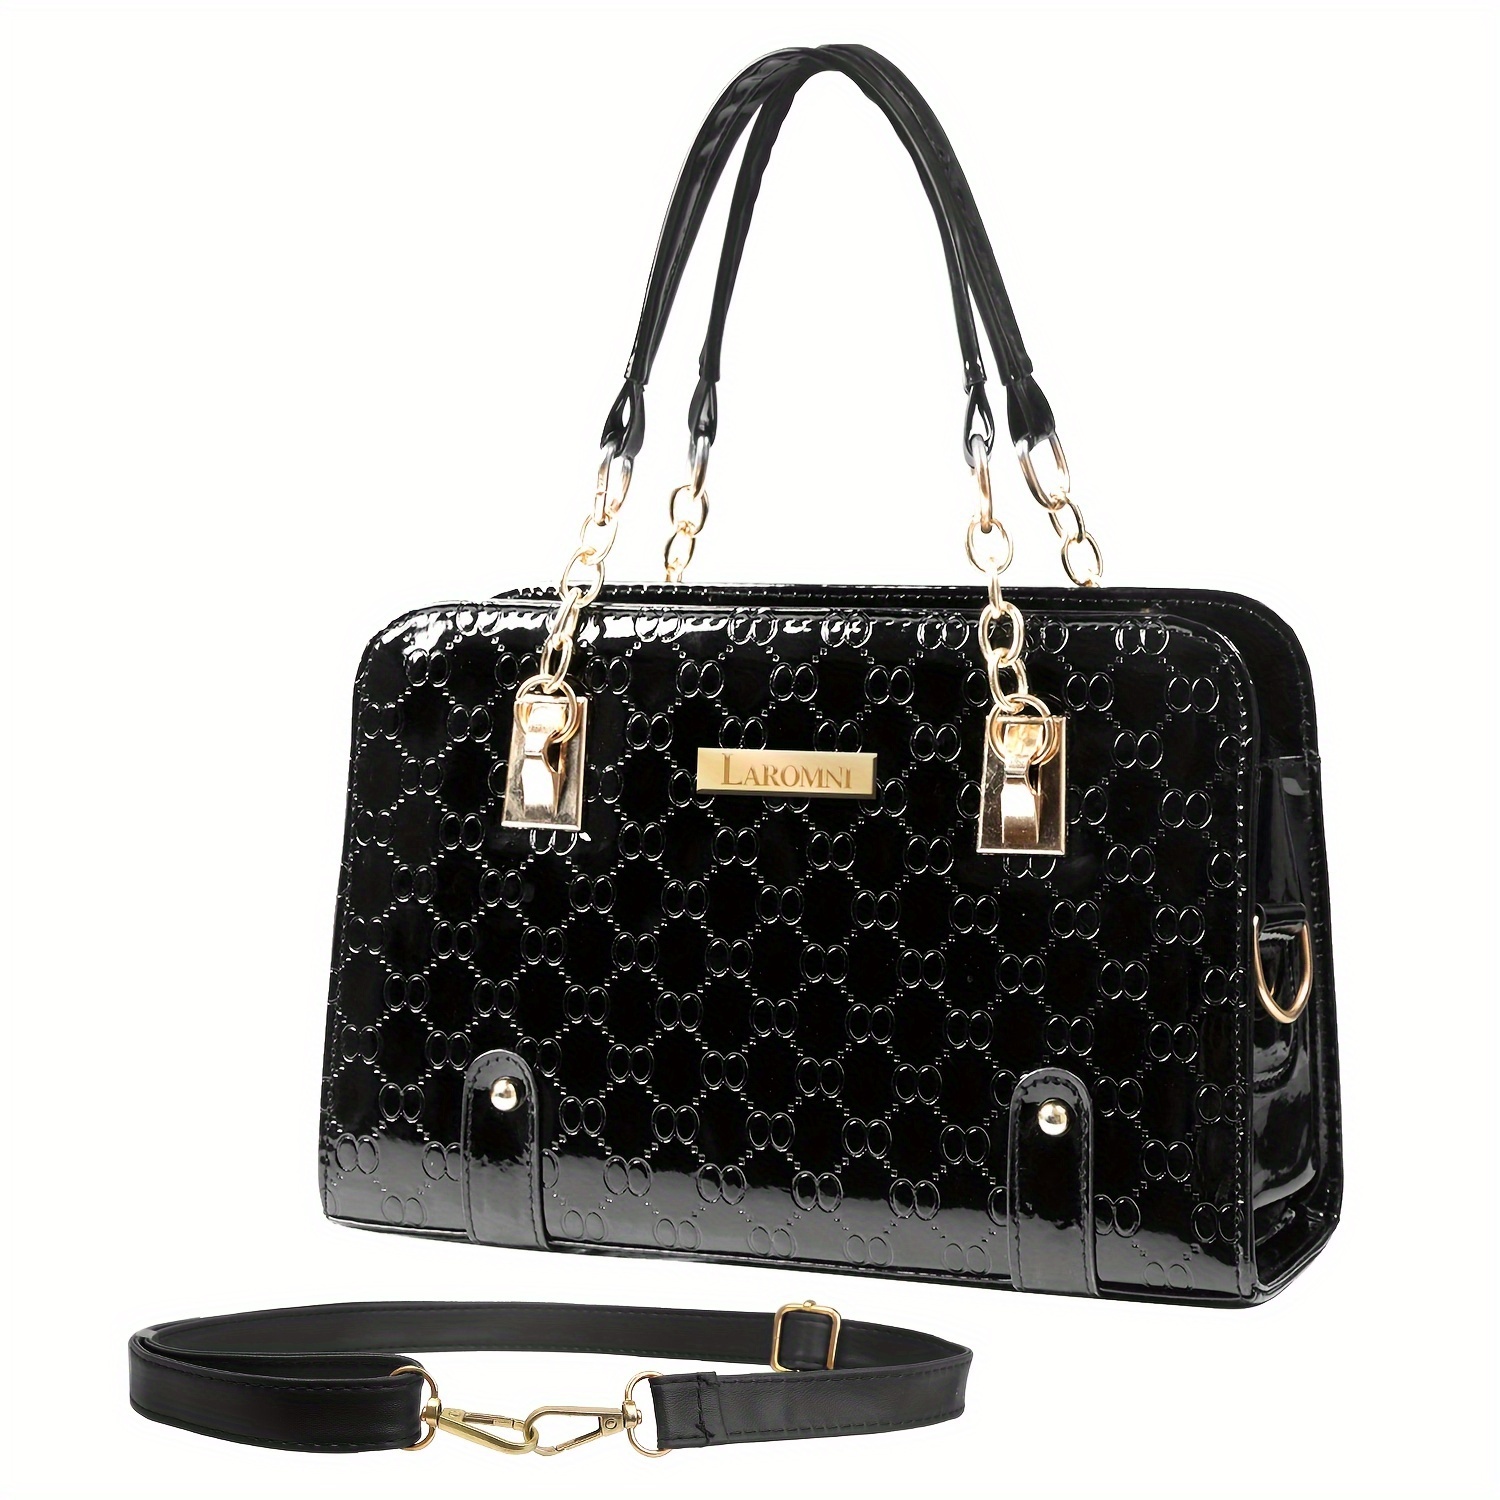 

Women's Fashion Synthetic Leather Handbag, Elegant Quilted Tote Bag, Adjustable Shoulder & Crossbody Strap Purse